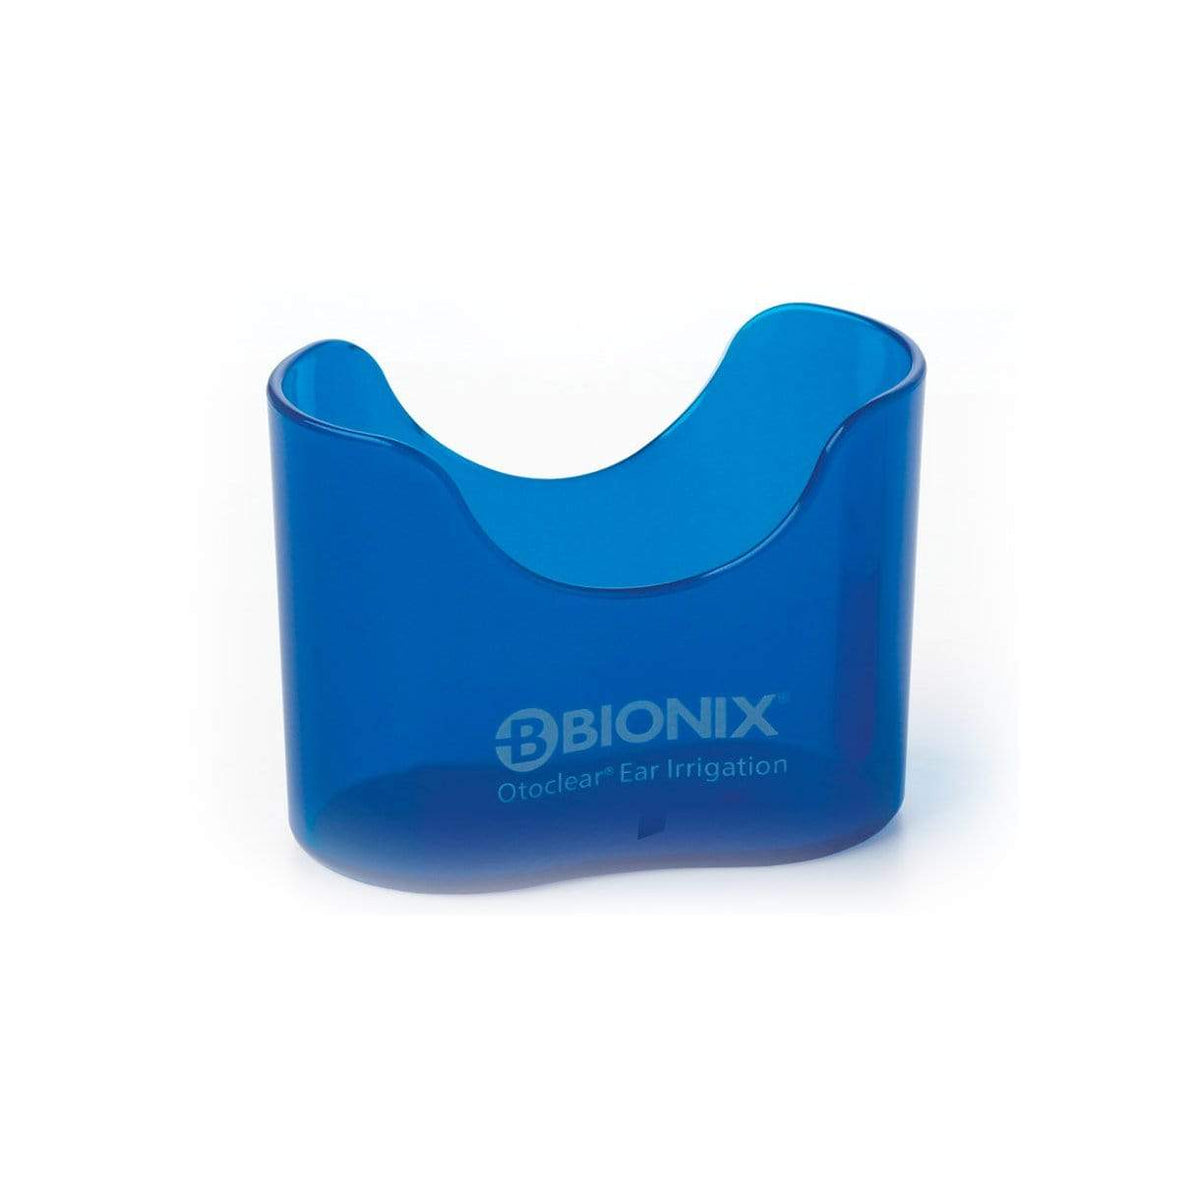 Bionix Ear Irrigation Basins